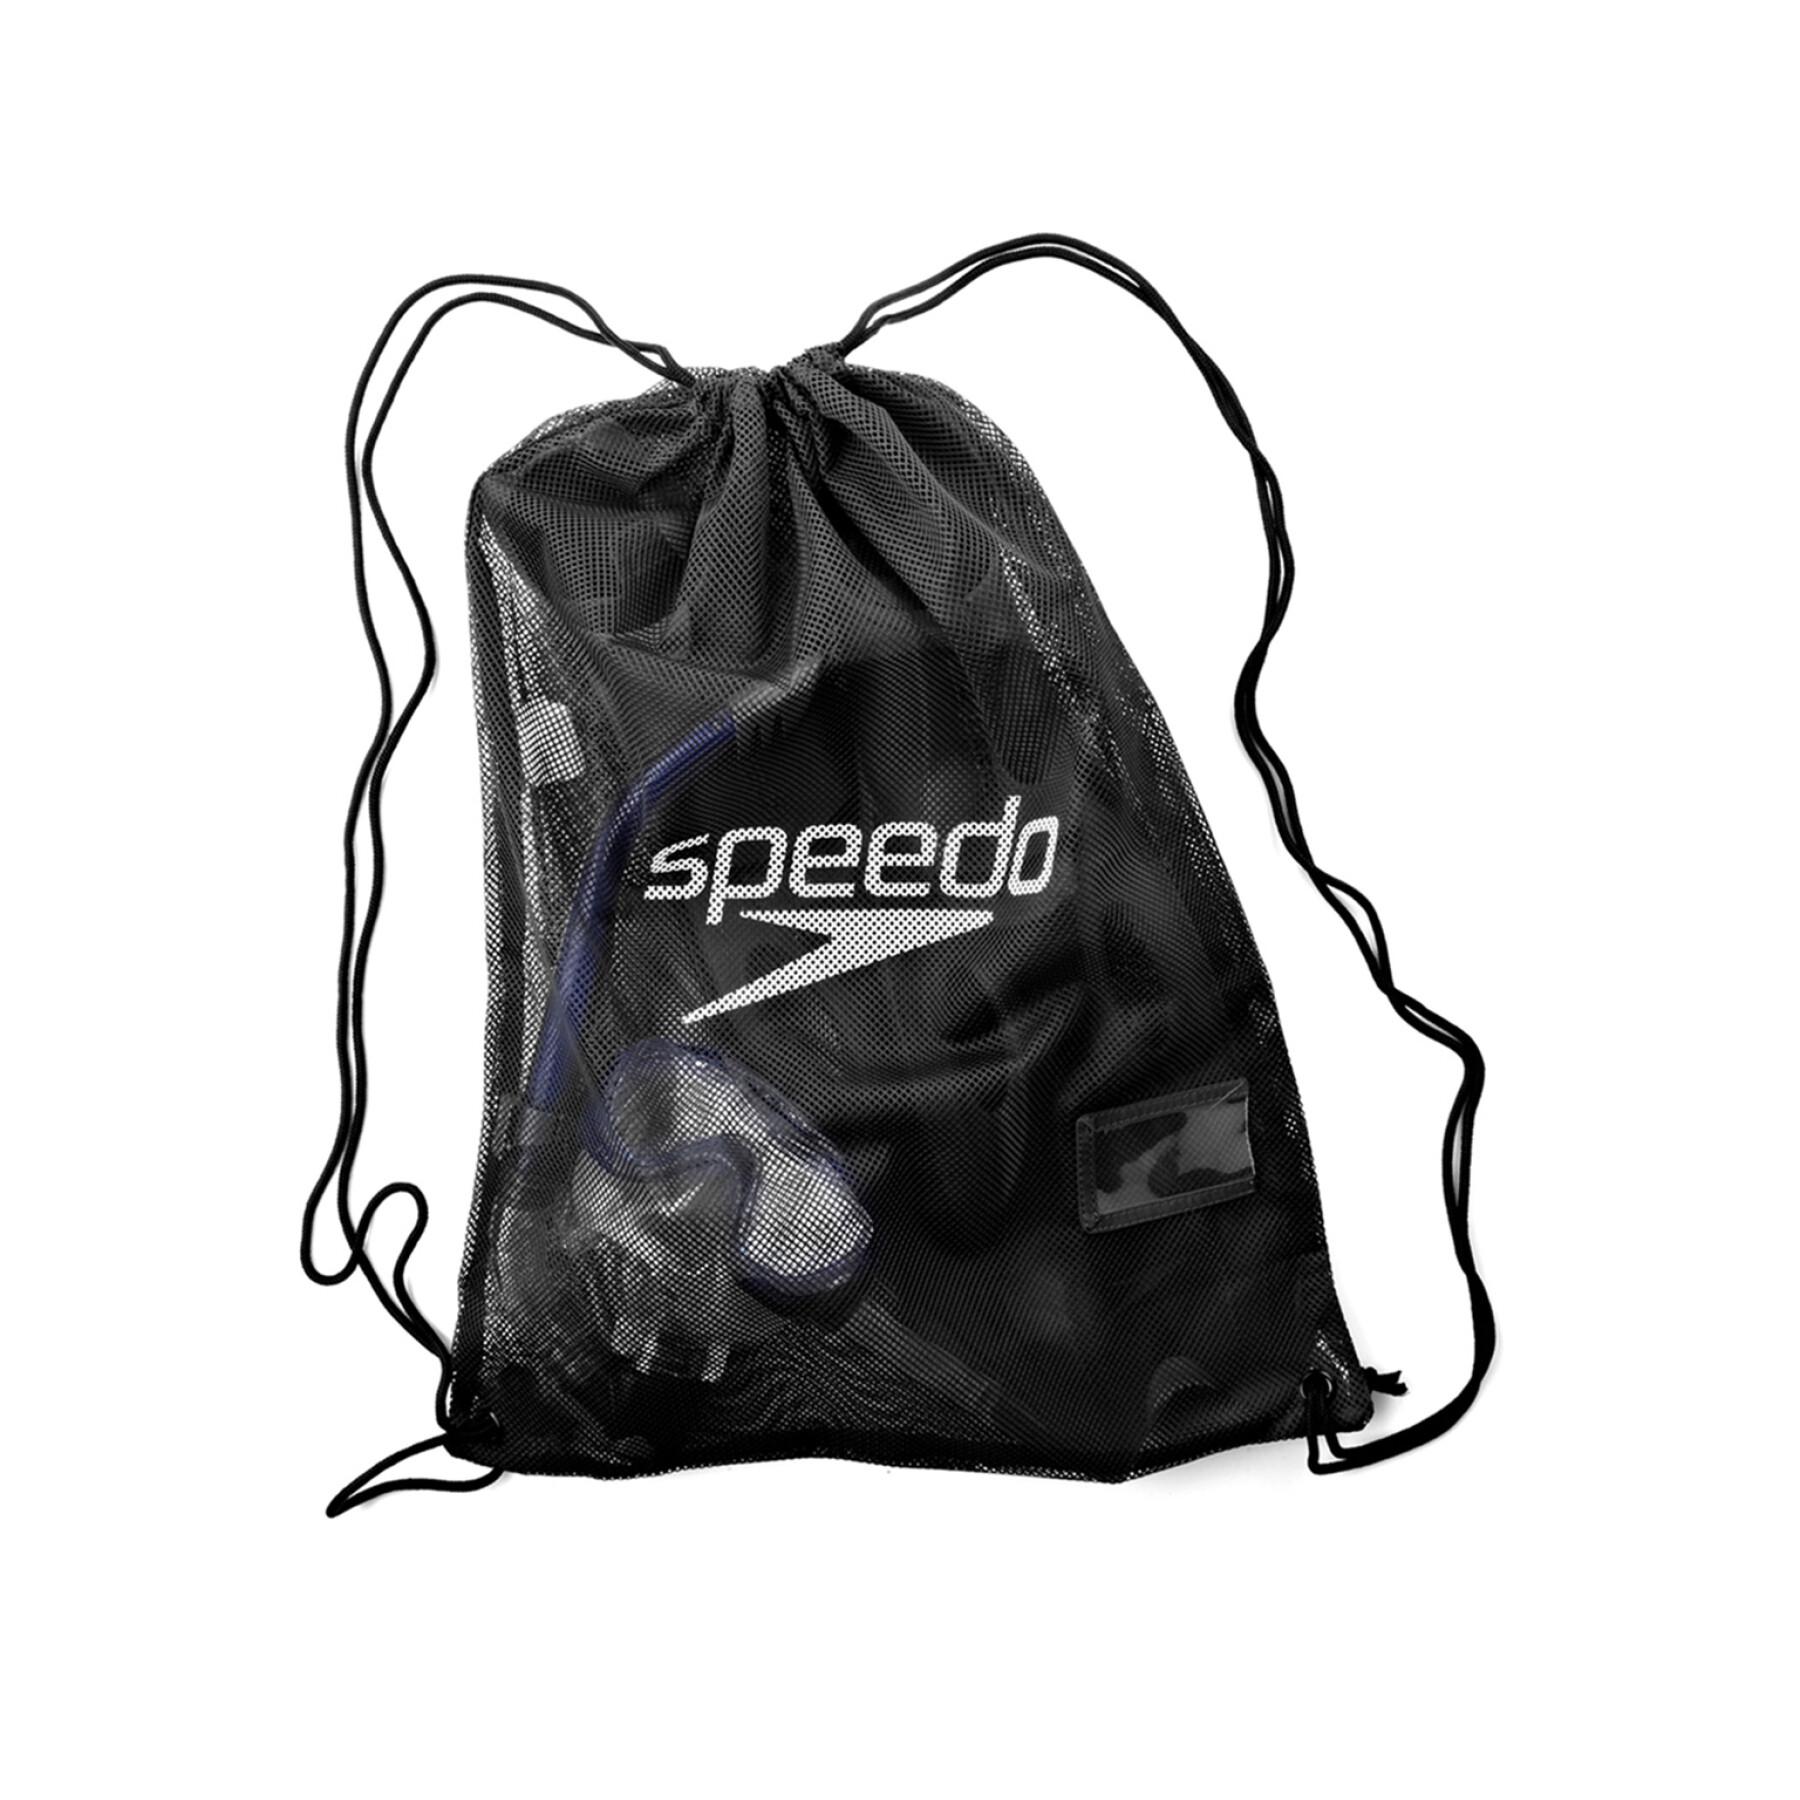 Equipment net bag Speedo P3